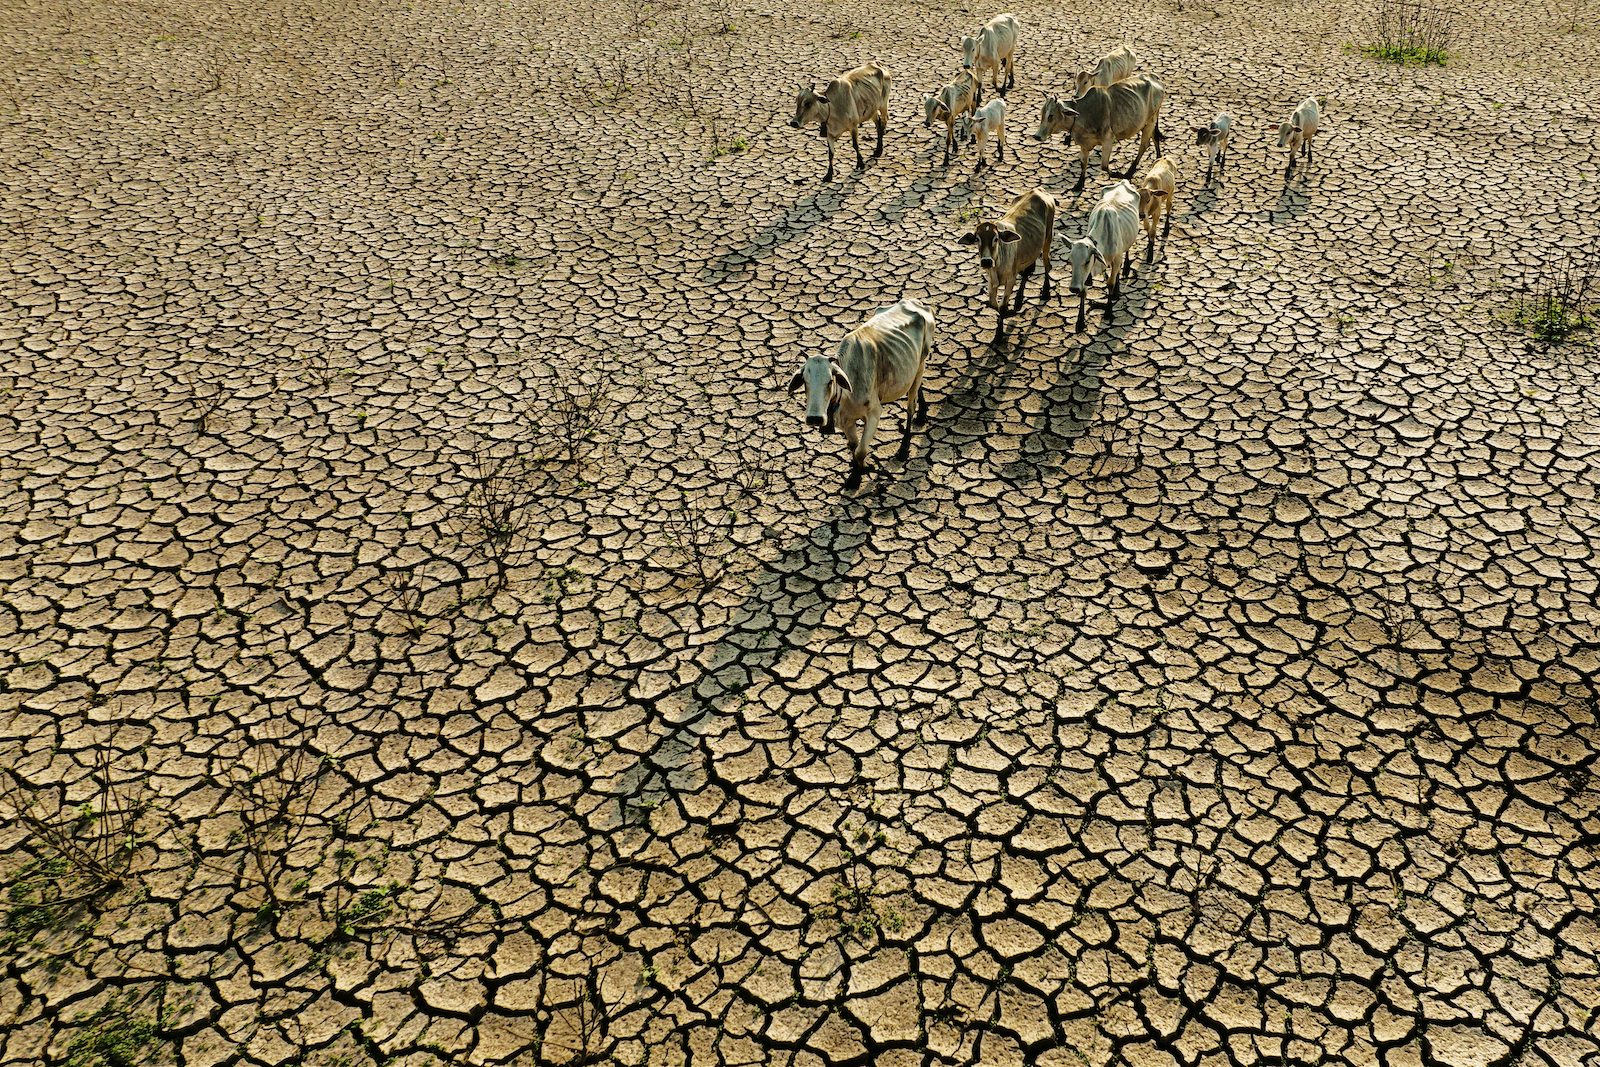 Farm animals climate change